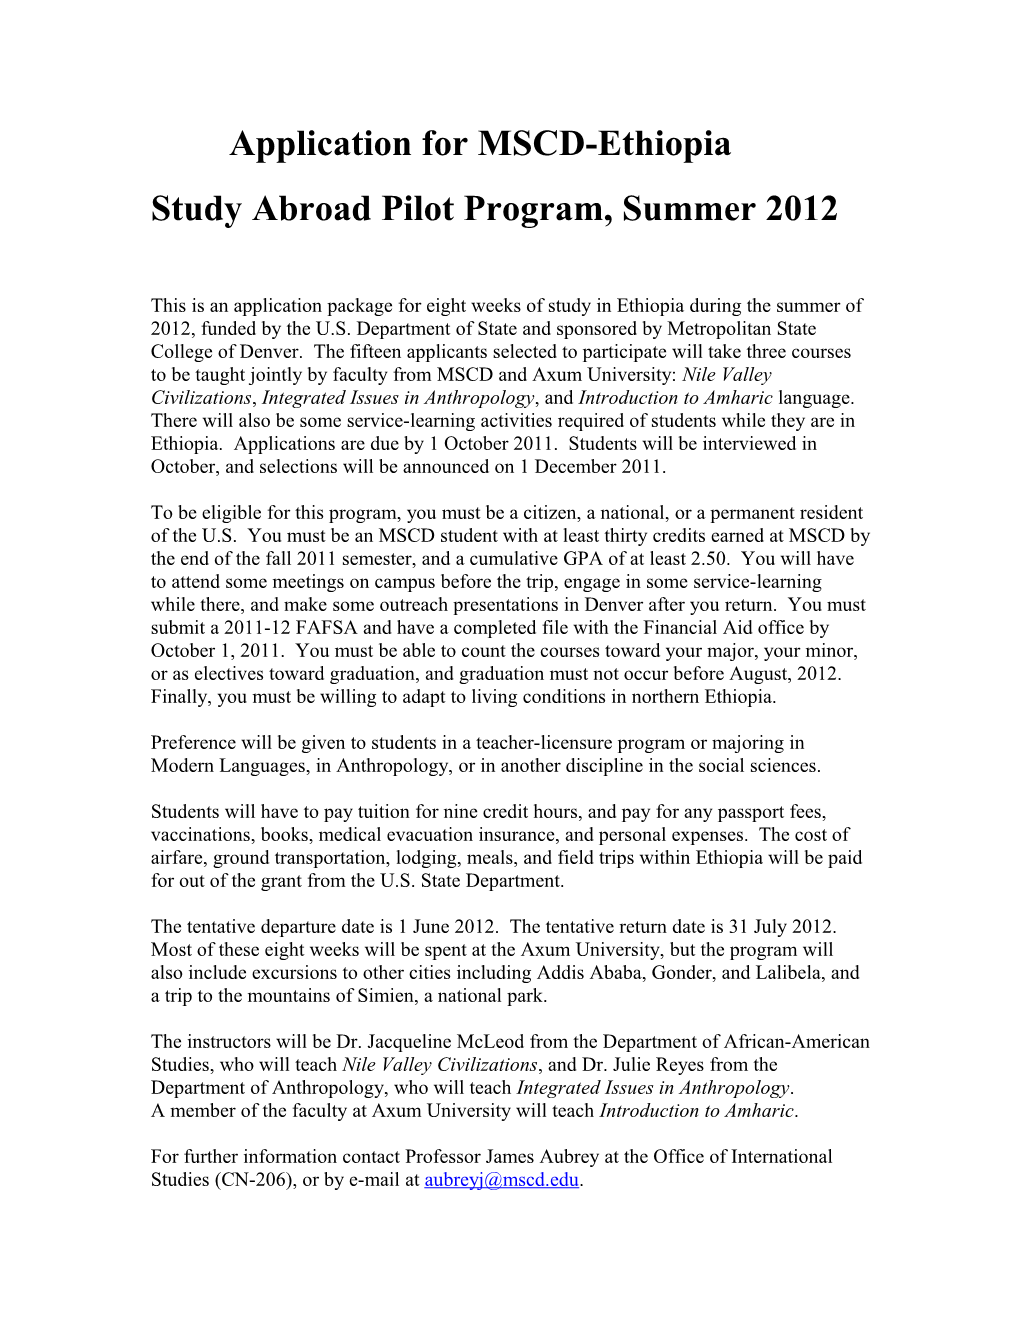 Study Abroad Pilot Program, Summer 2012